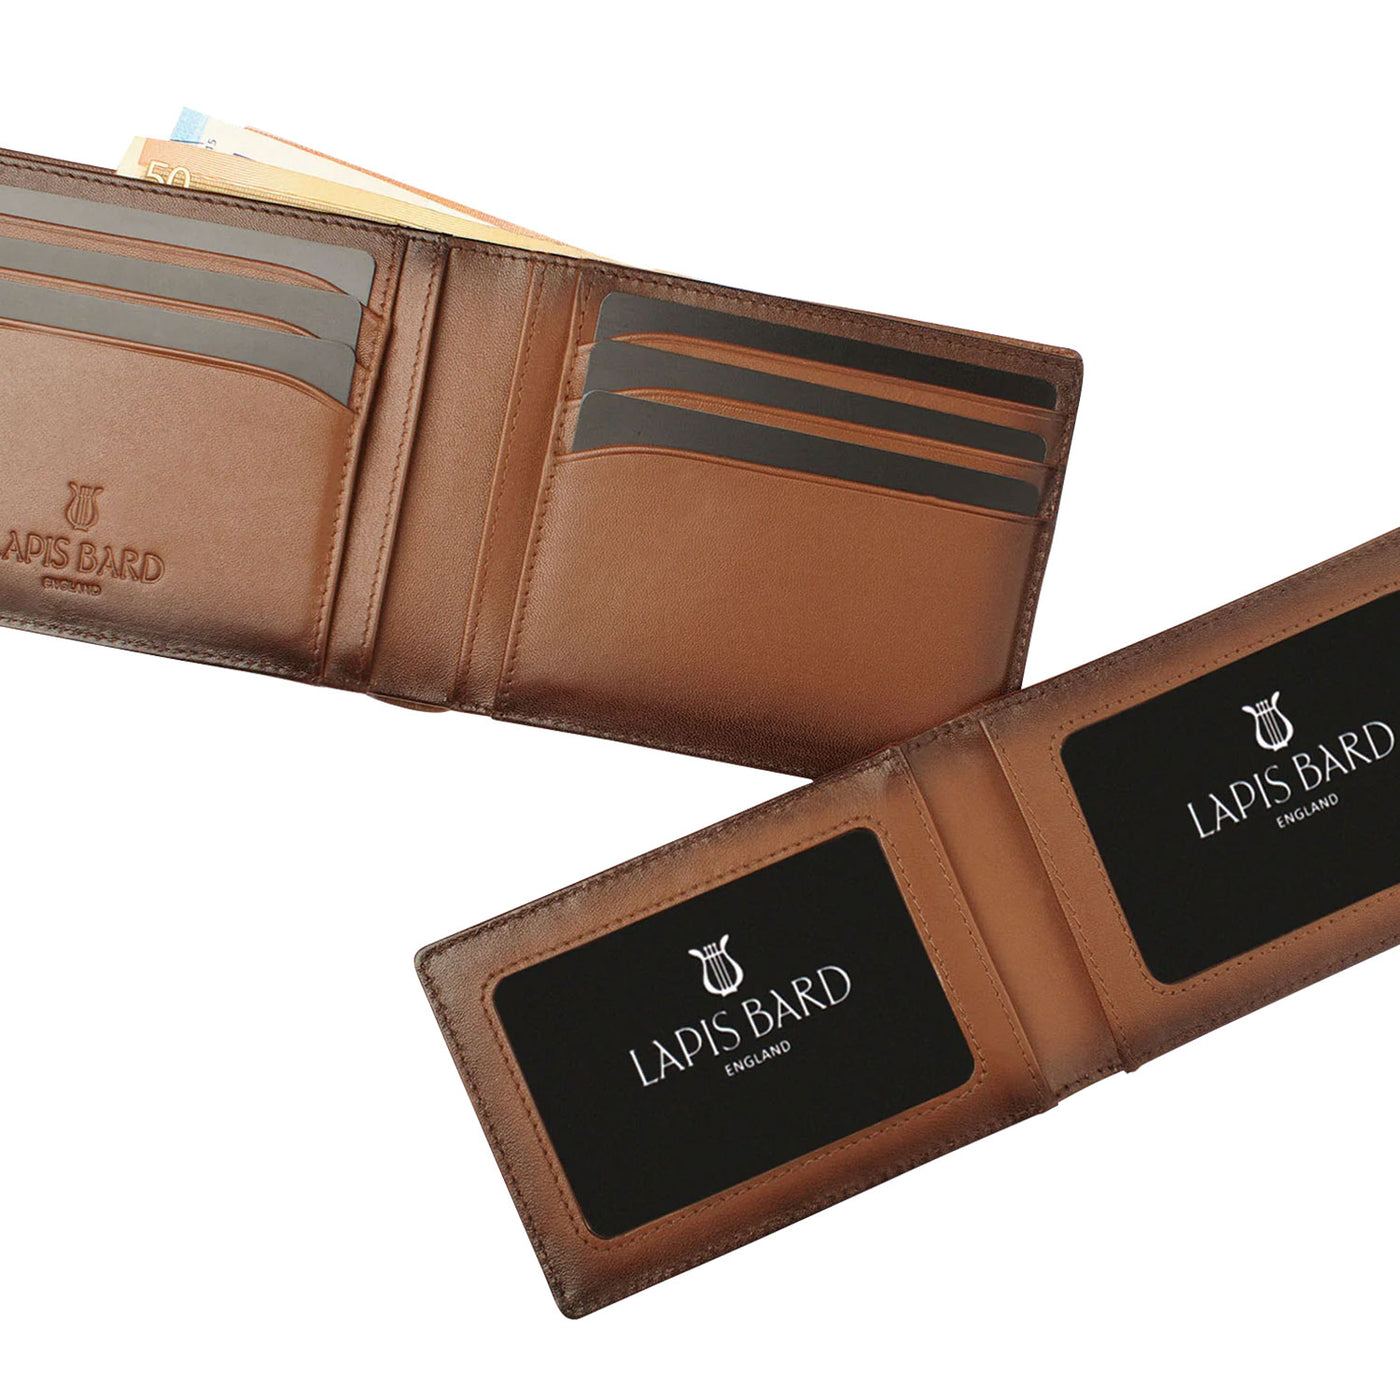 Lapis Bard Ducorium Bifold Evening 6cc Wallet with Additional Sleeve - Cognac 3